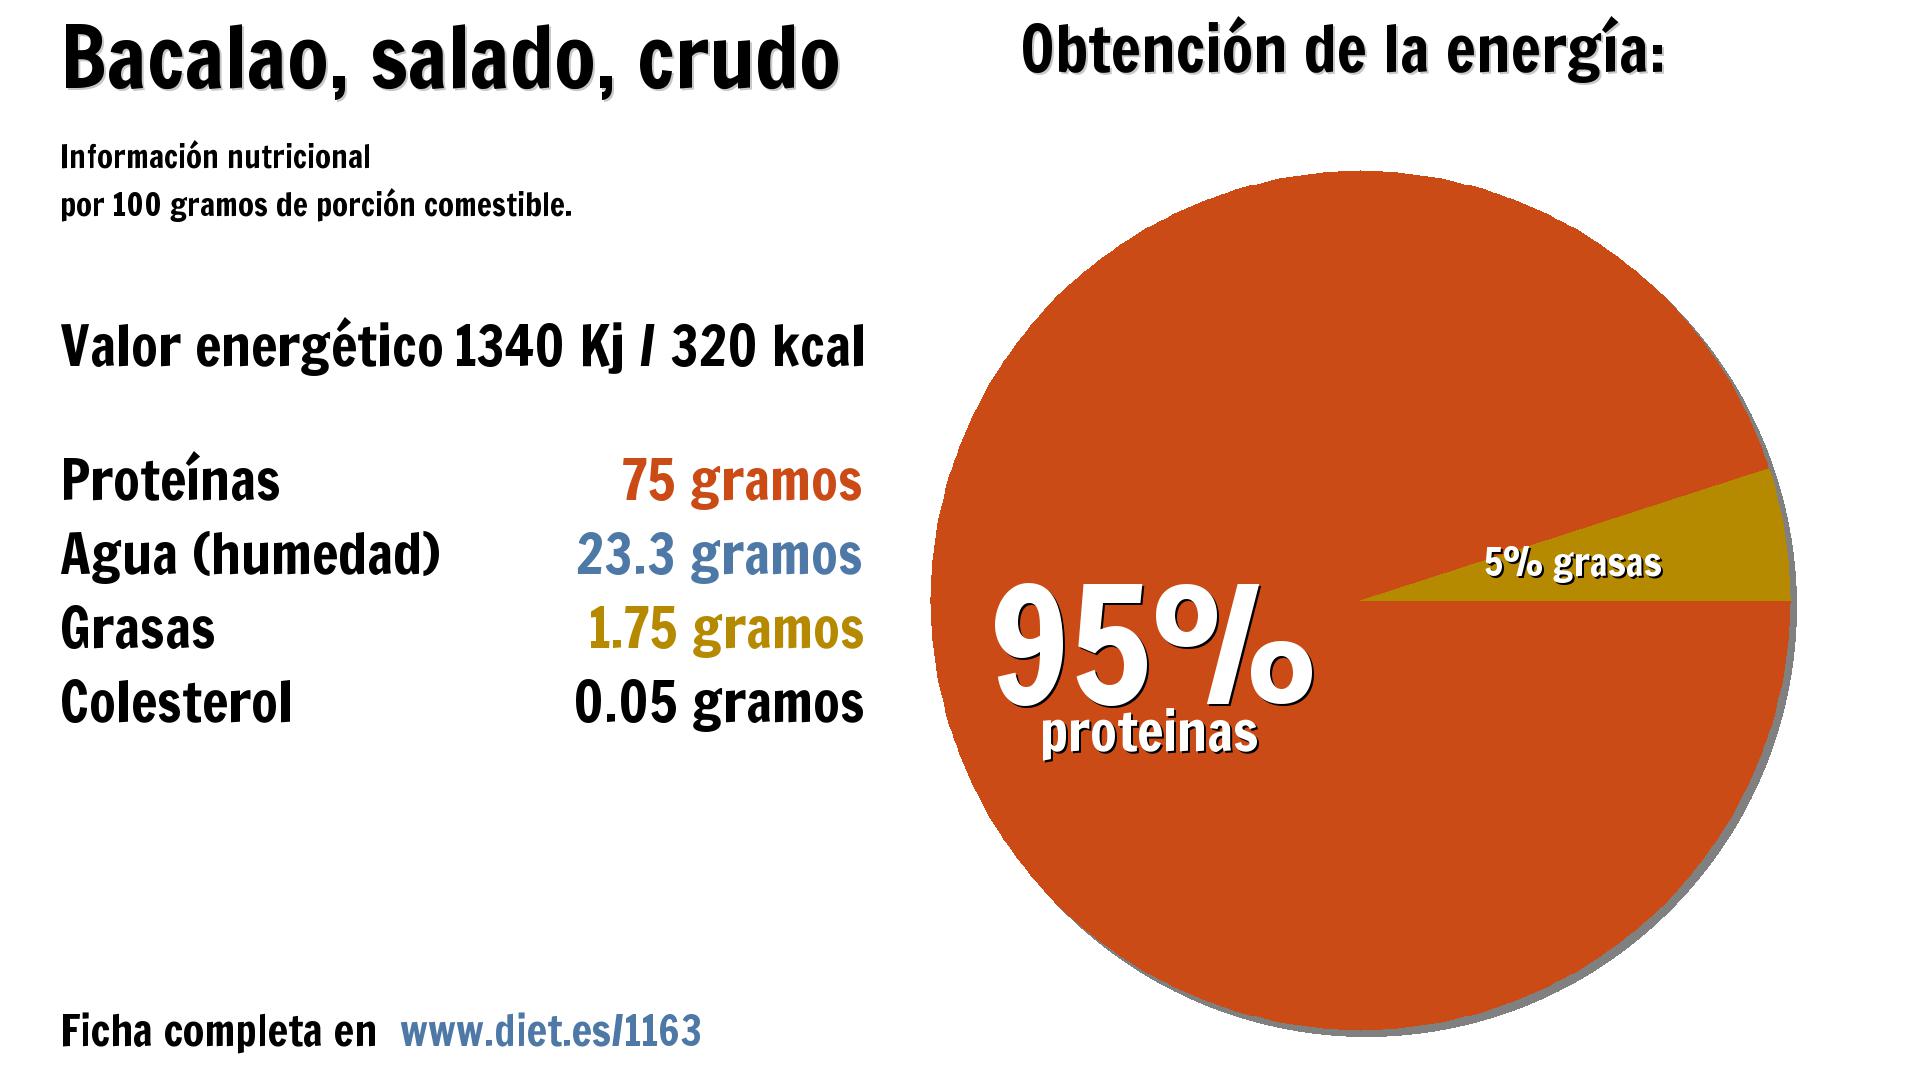 Bacalao, salado, crudo: energía 1340 Kj, proteínas 75 g., agua 23 g. y grasas 2 g.